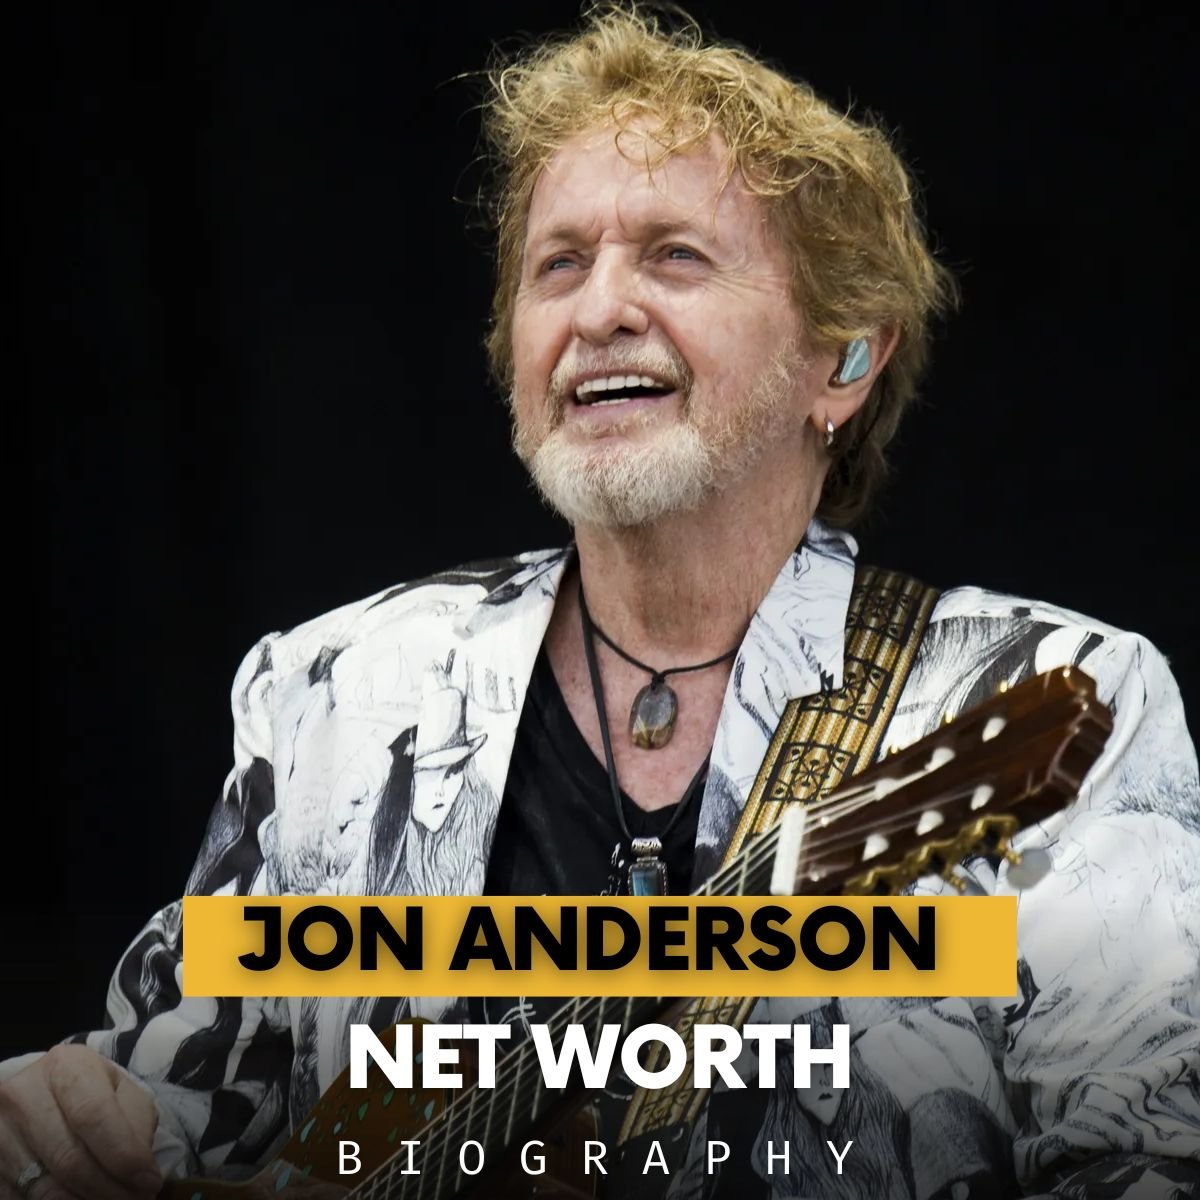 Jon Anderson net worth